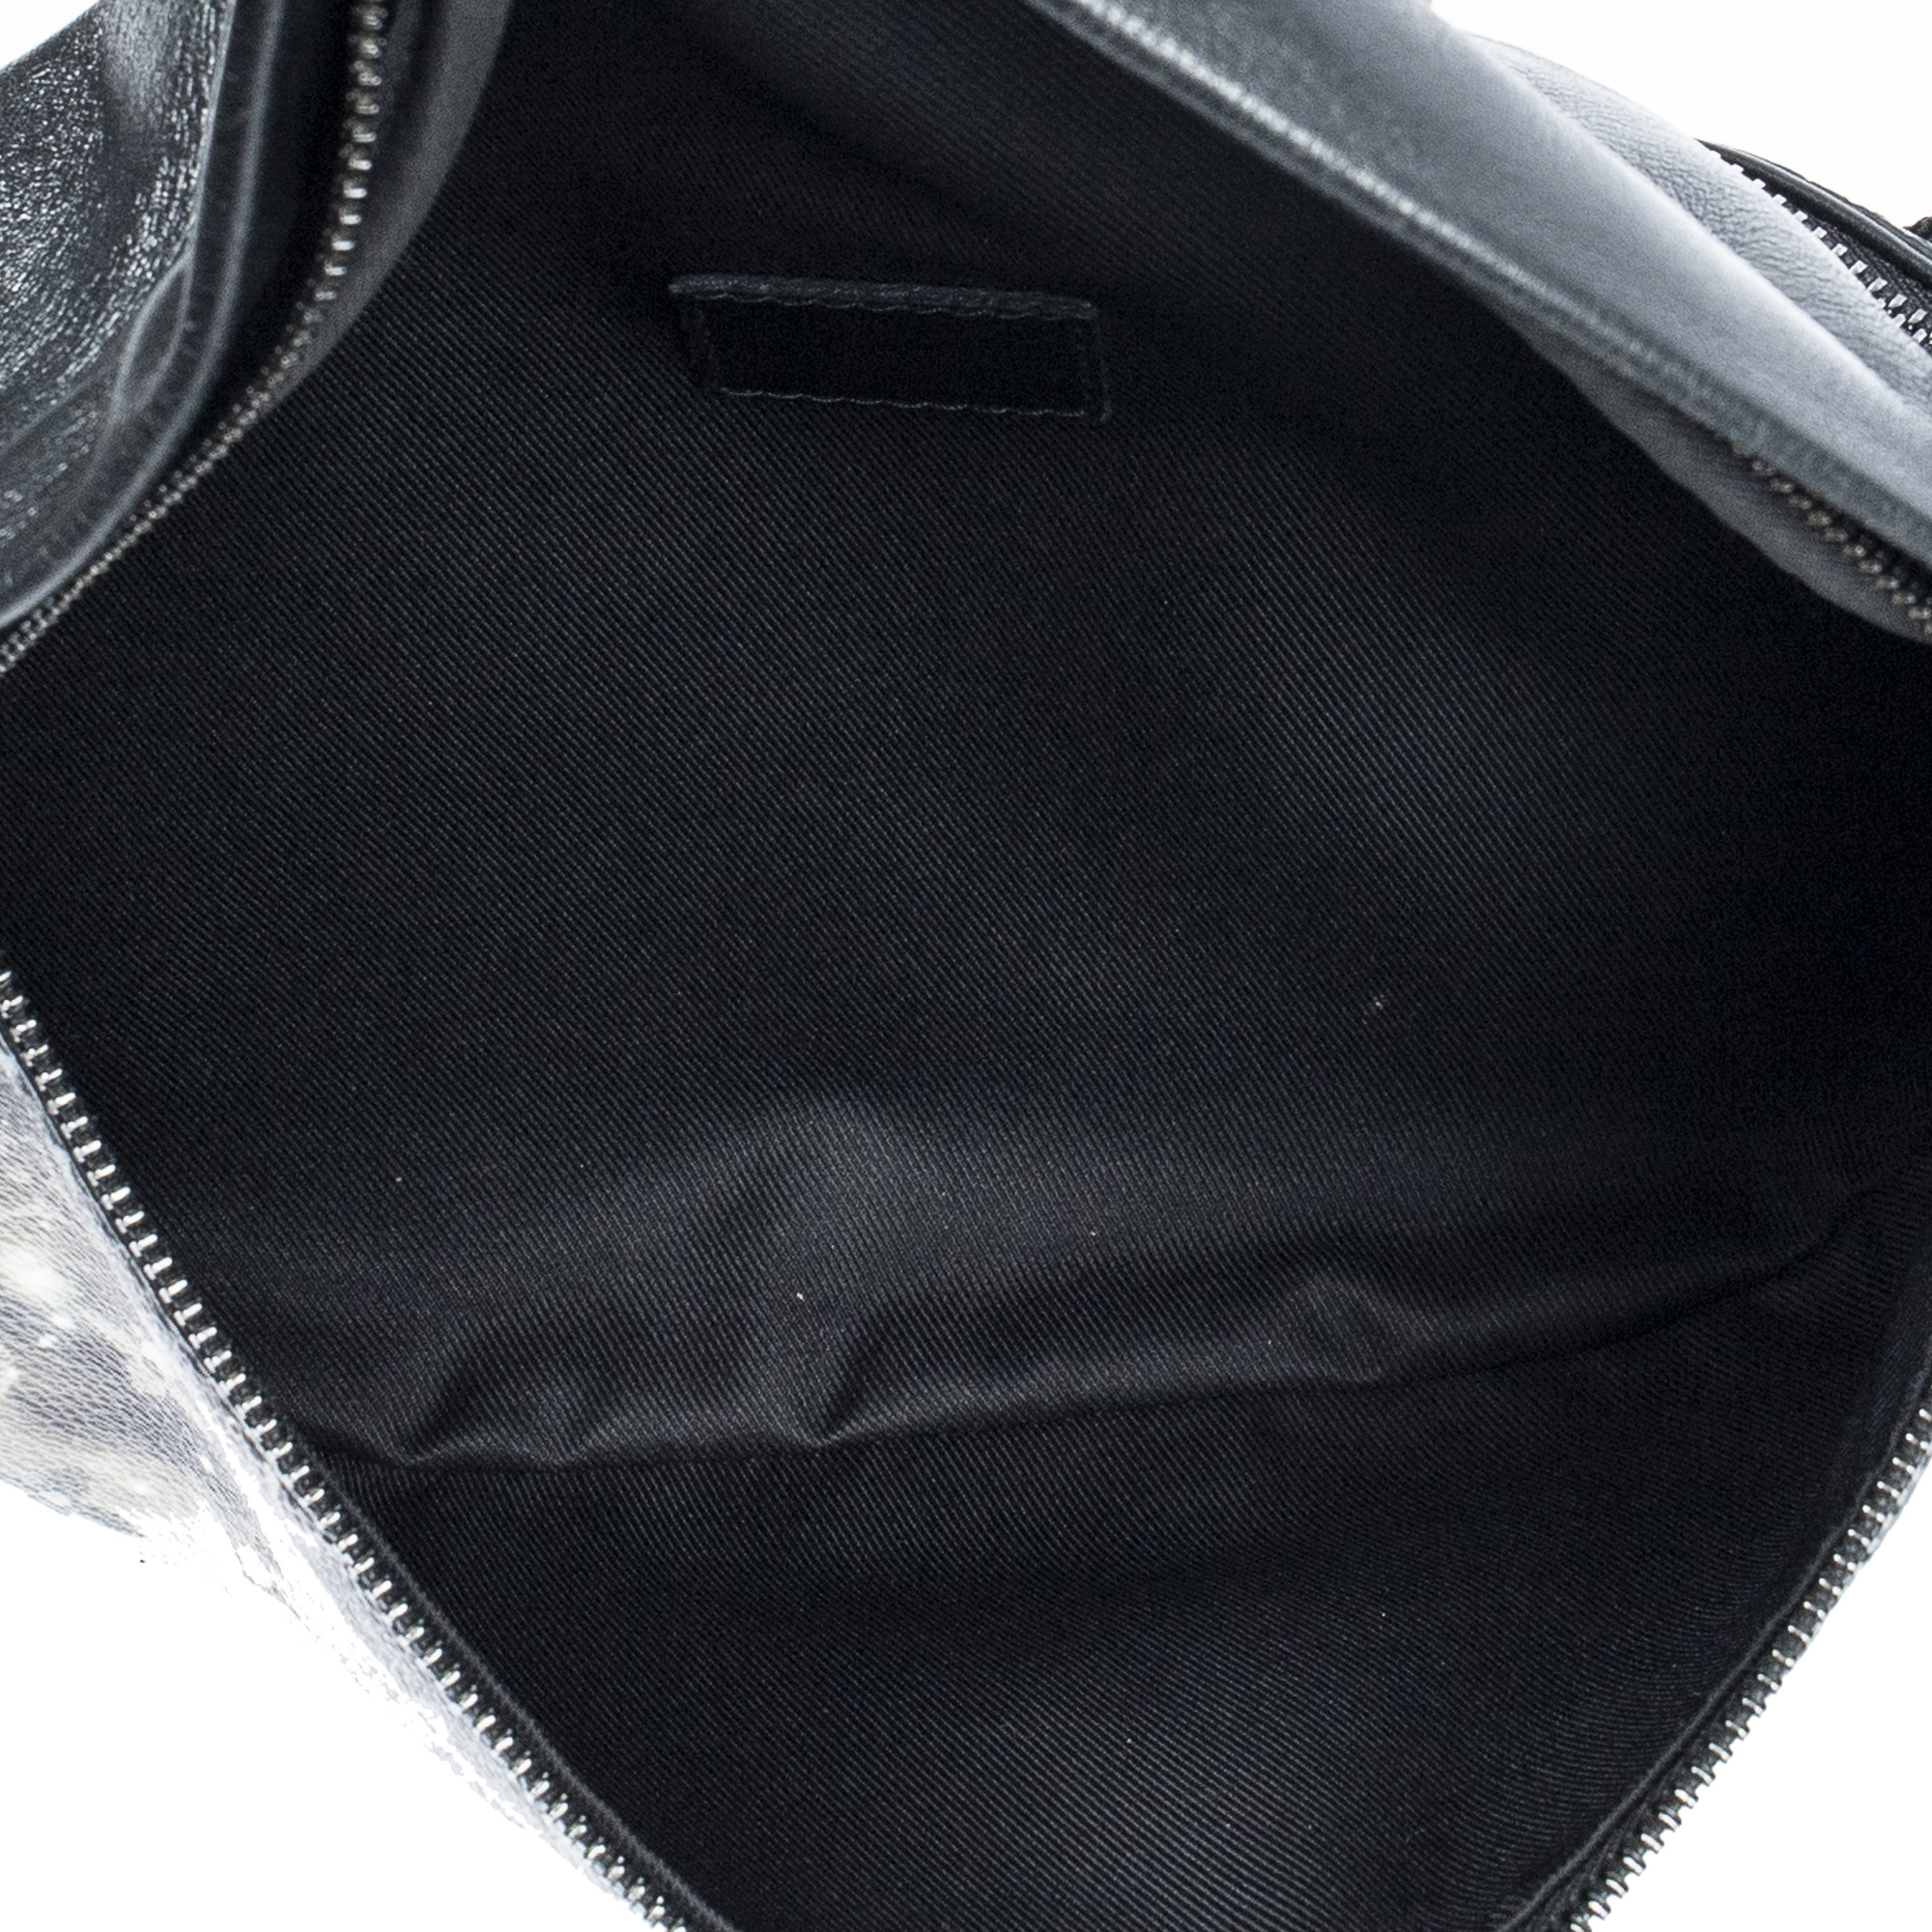 Ltd. Ed. Summer-Spring Collection Discovery Bum Bag - BrandCo Paris